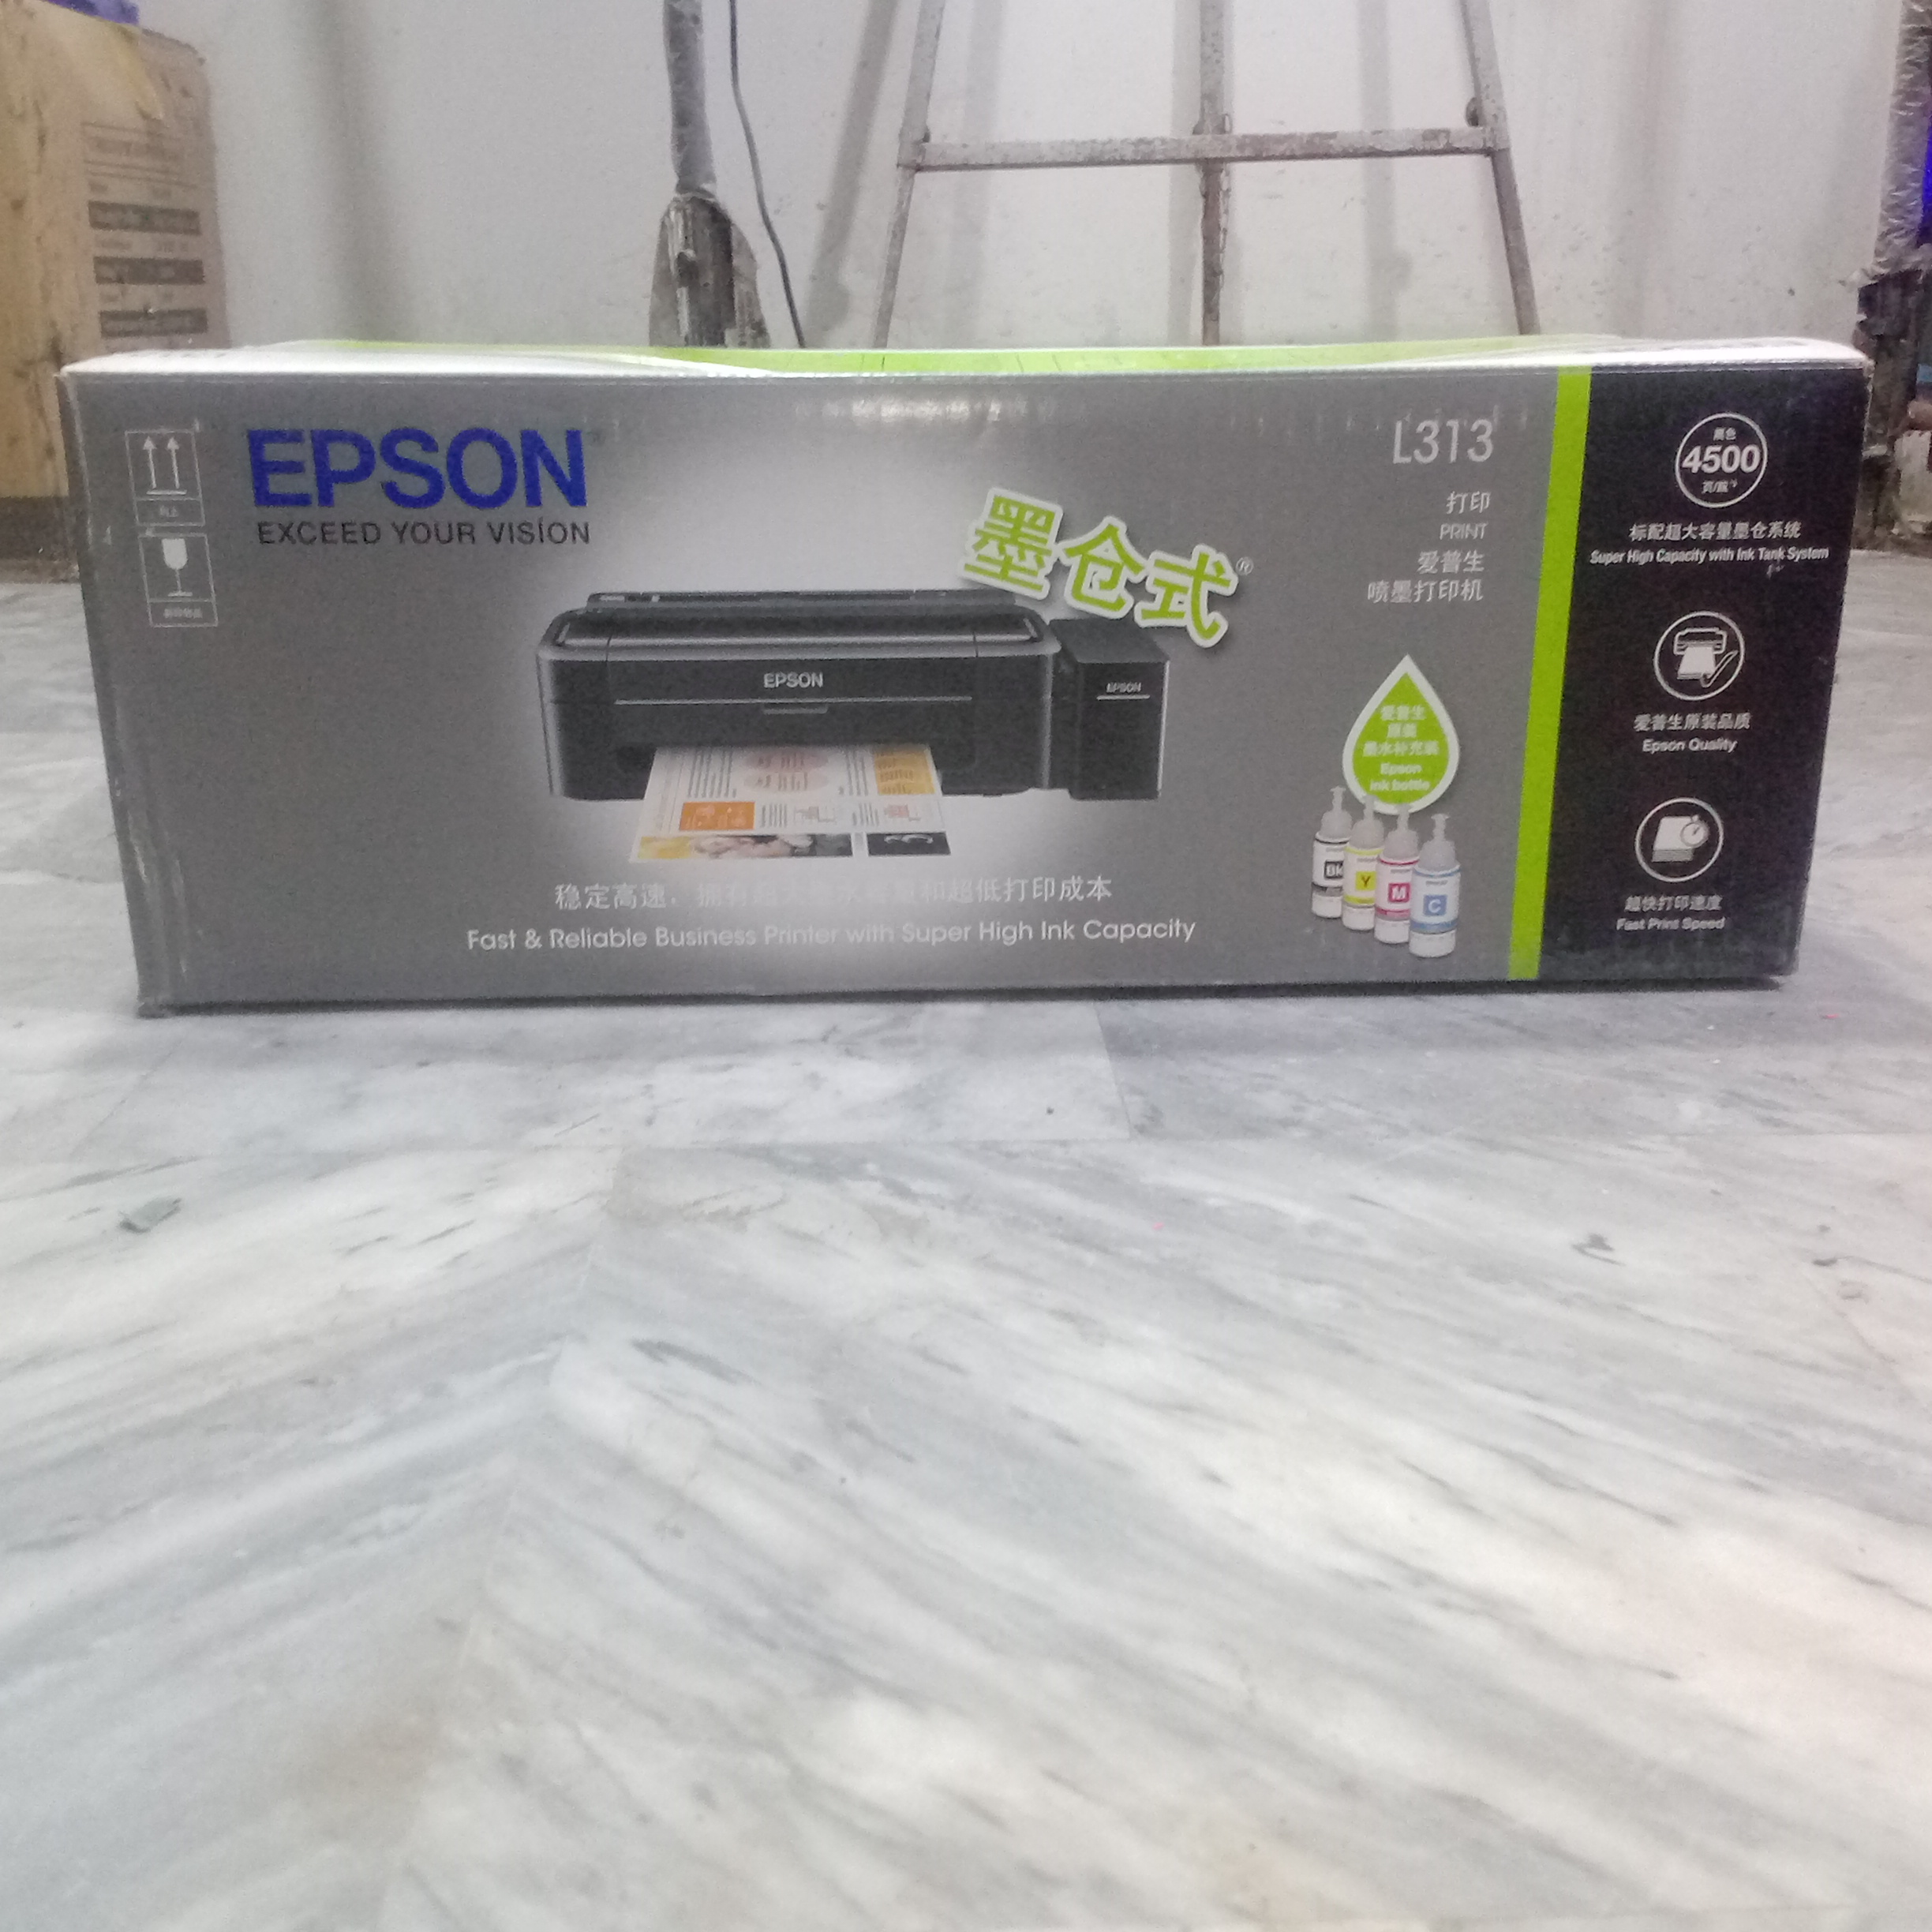 Epson L313 Printer.